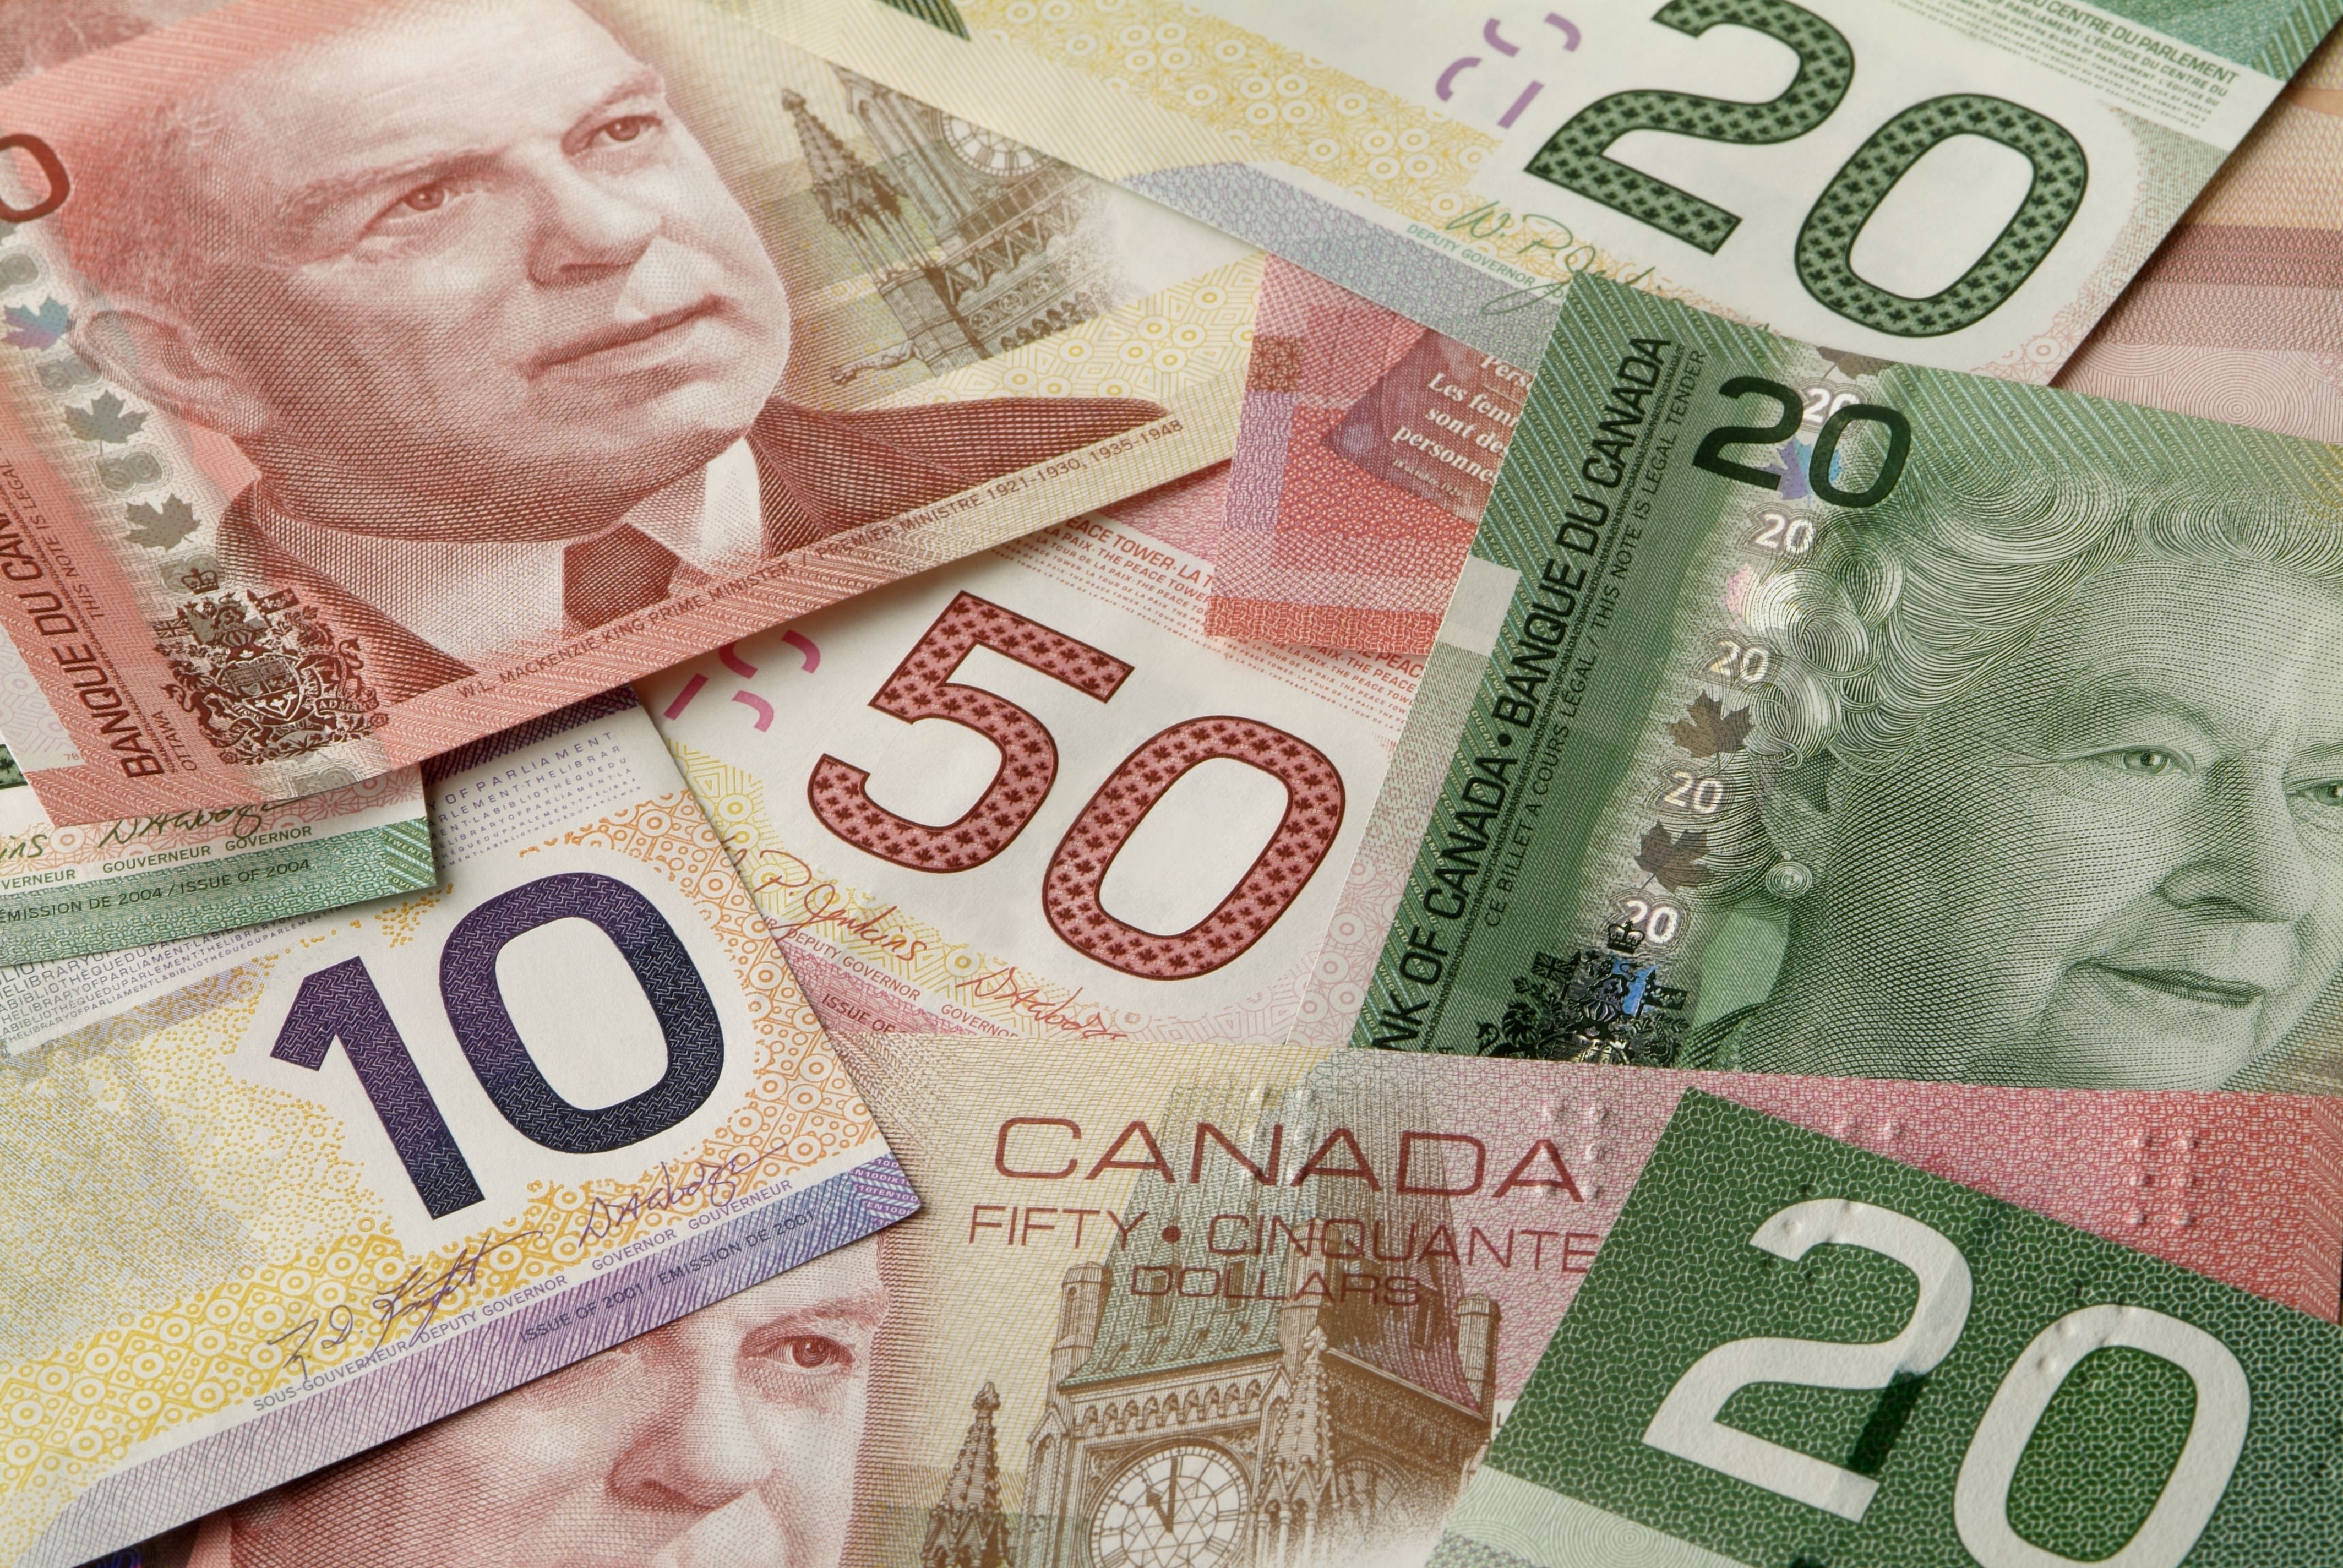 Only 8 CAD – Canadian Dollars To Obtain Vietnam Visa